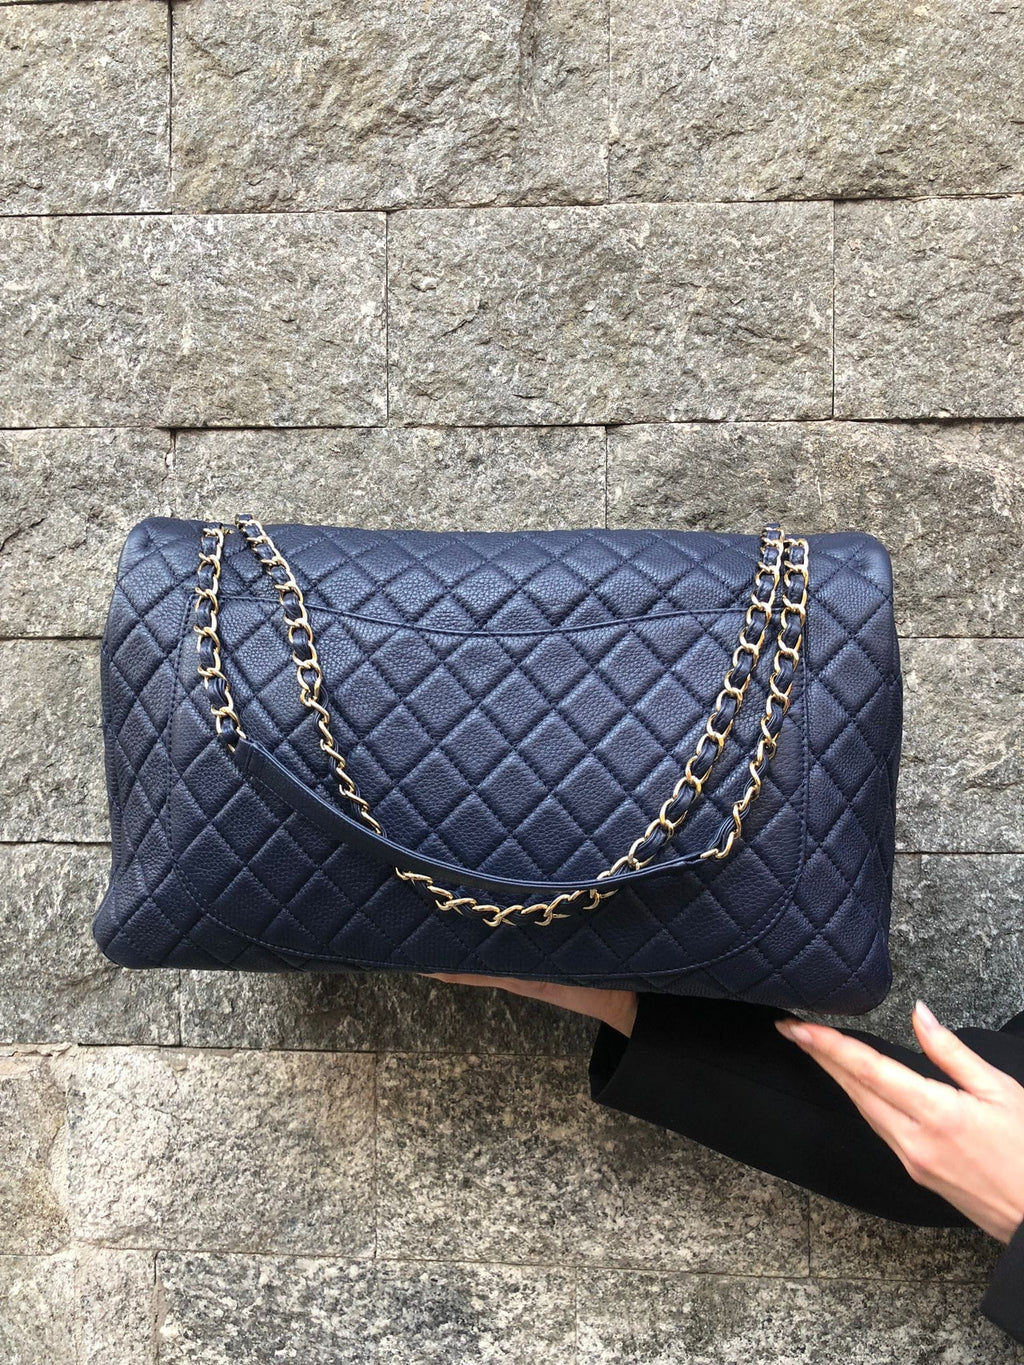 Chanel XL Classic Flap Limited Edition Maxi Blue Caviar Bag